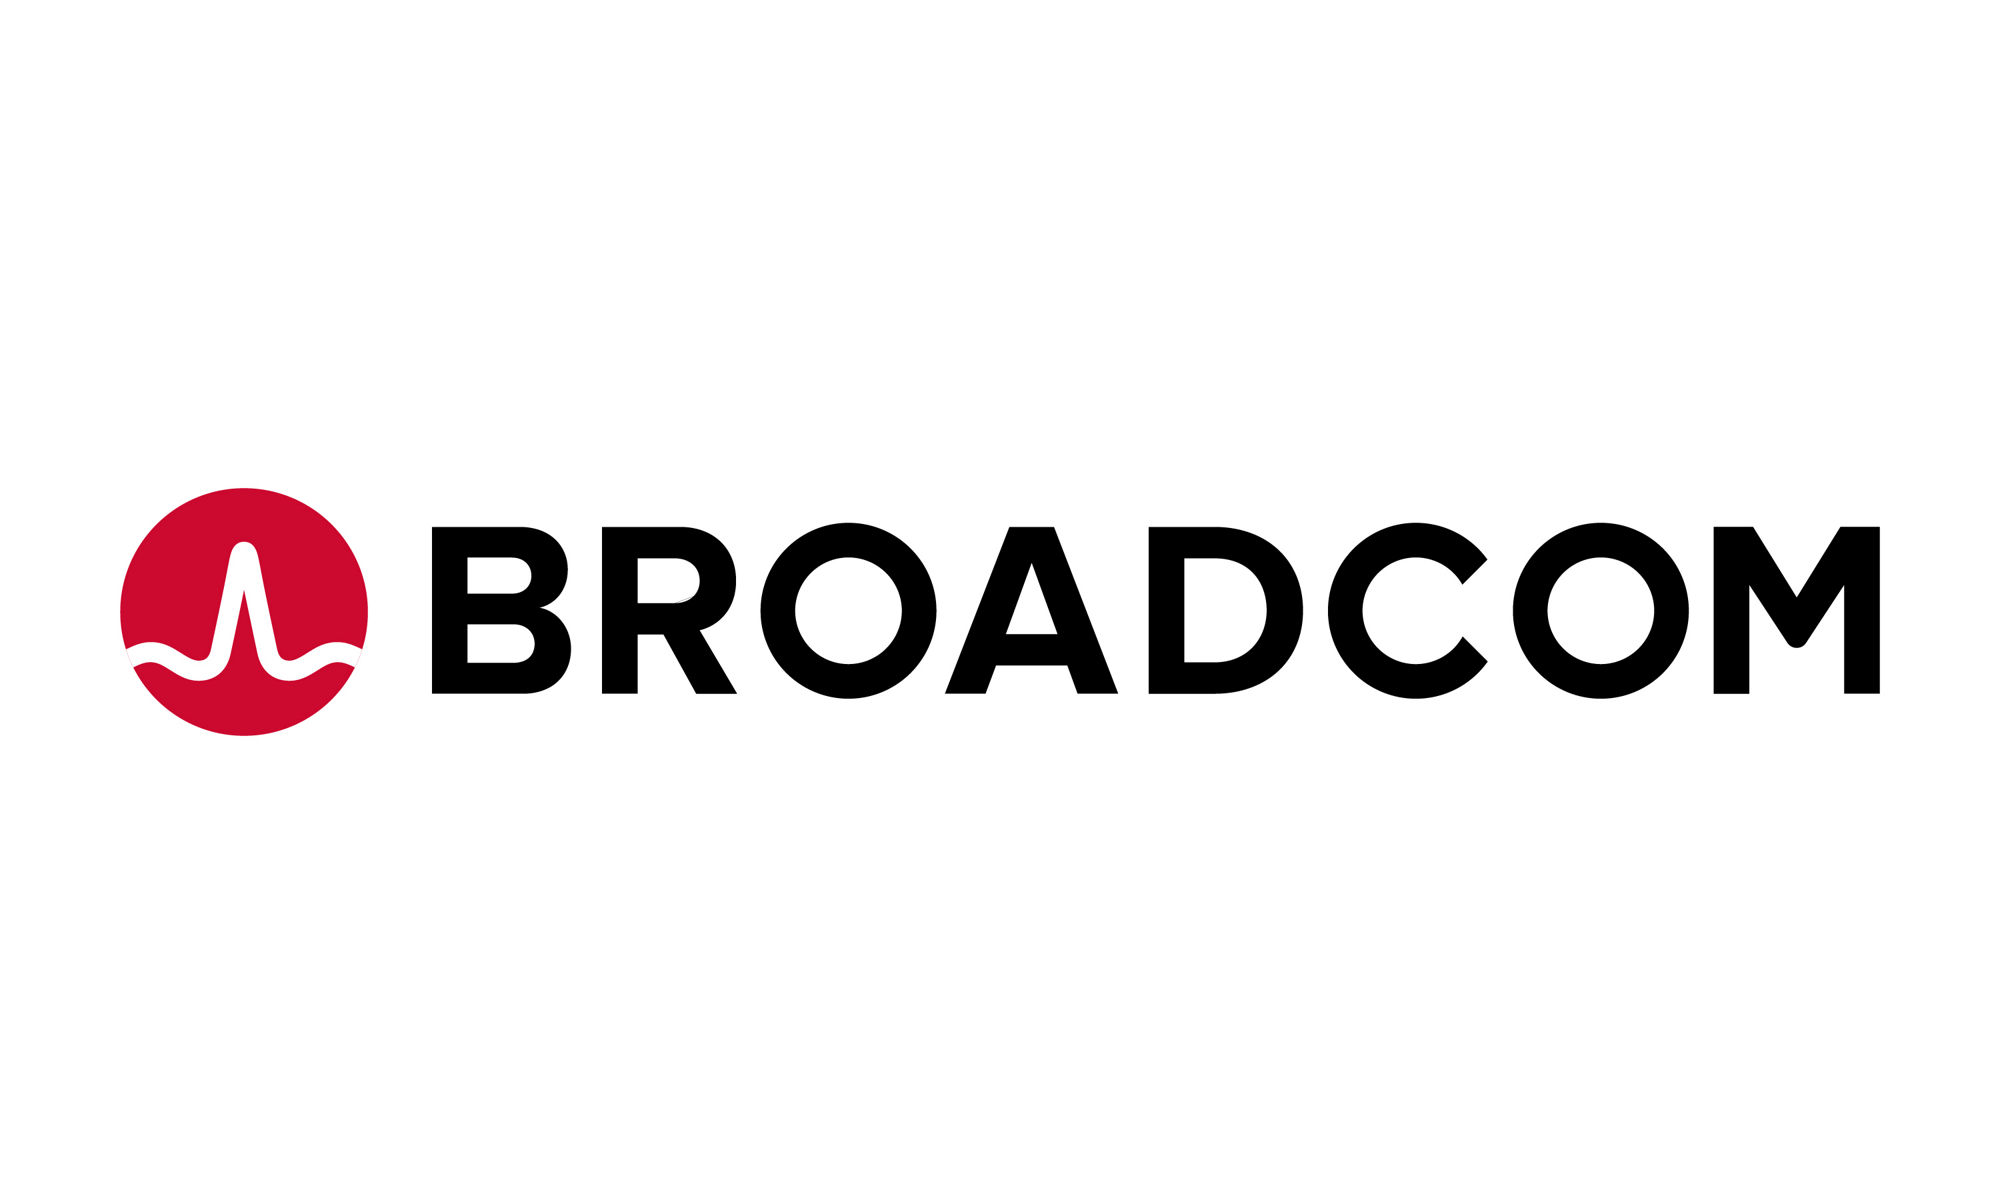 Boradcomのロゴ